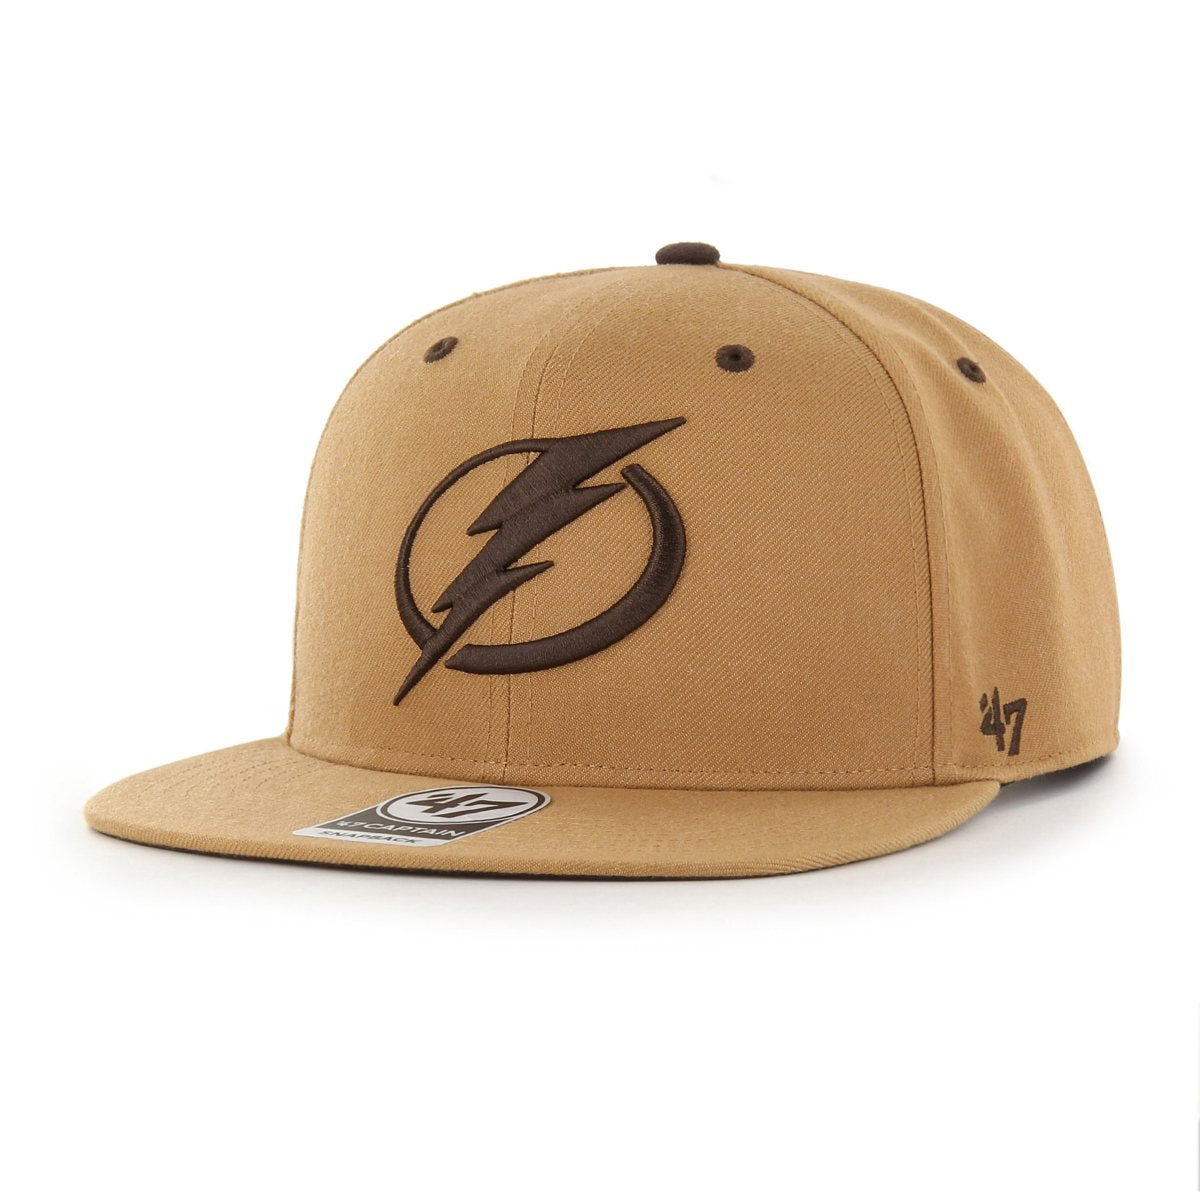 Tampa Bay Lightning '47 Toffee Captain Adjustable Hat